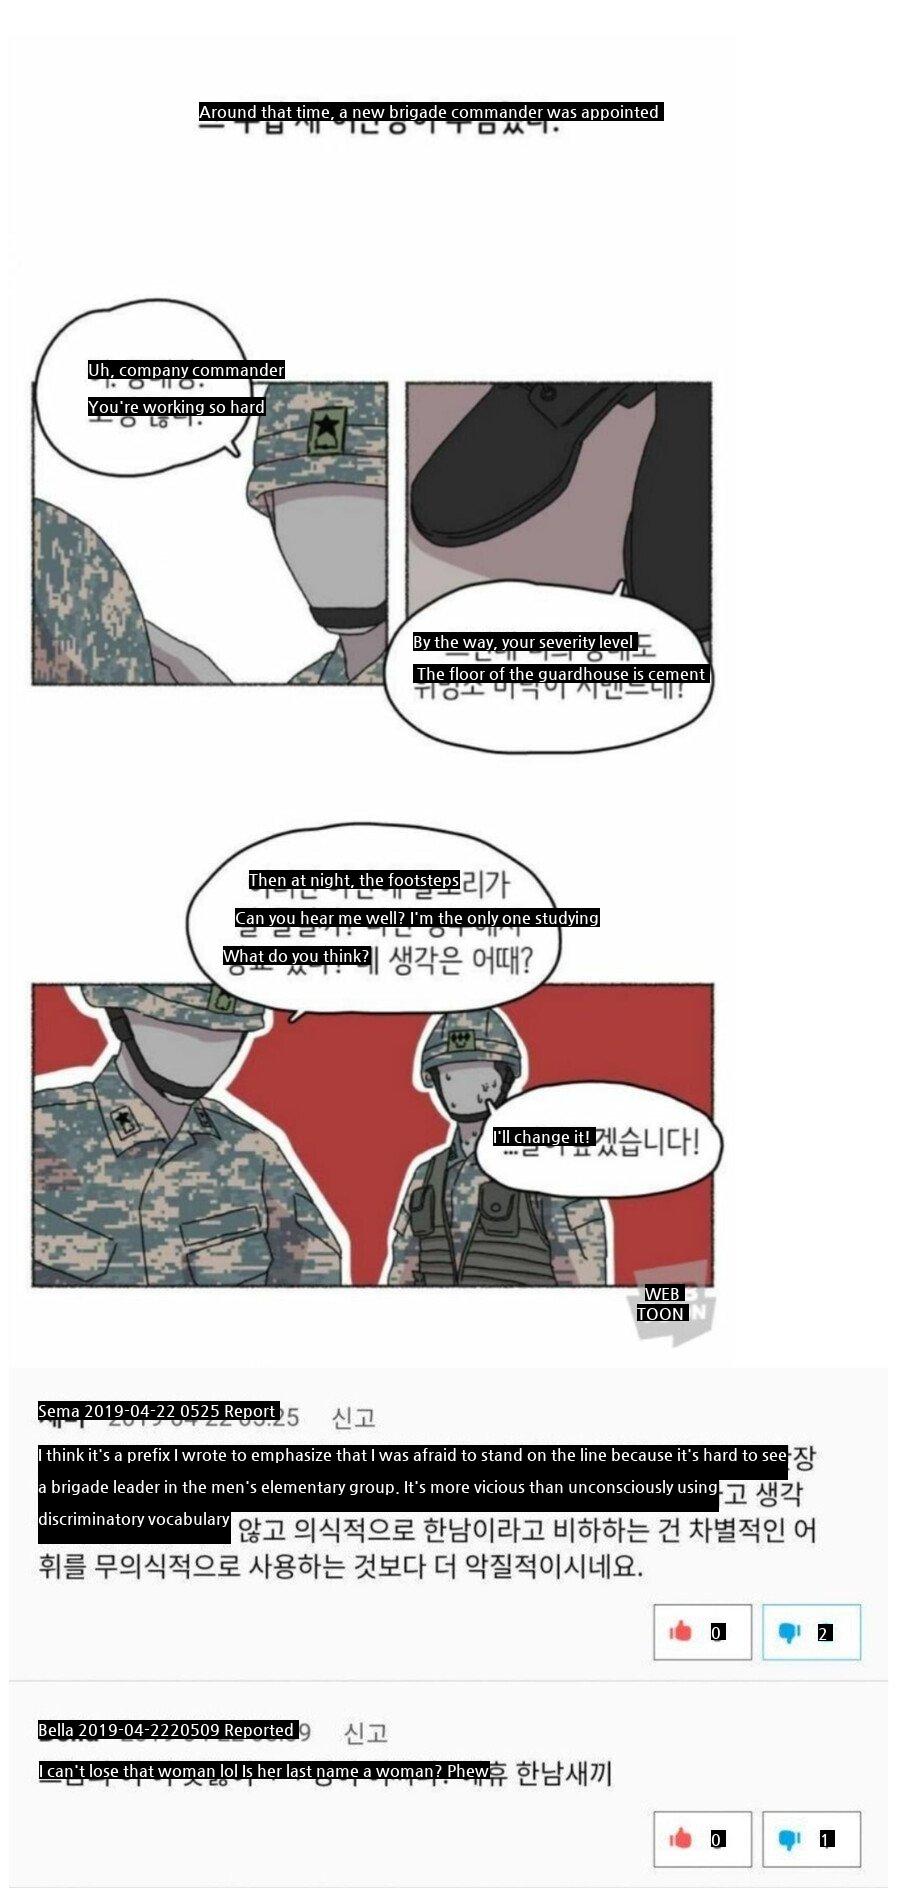 Military Webtoon Controversy Over Women's Degradation